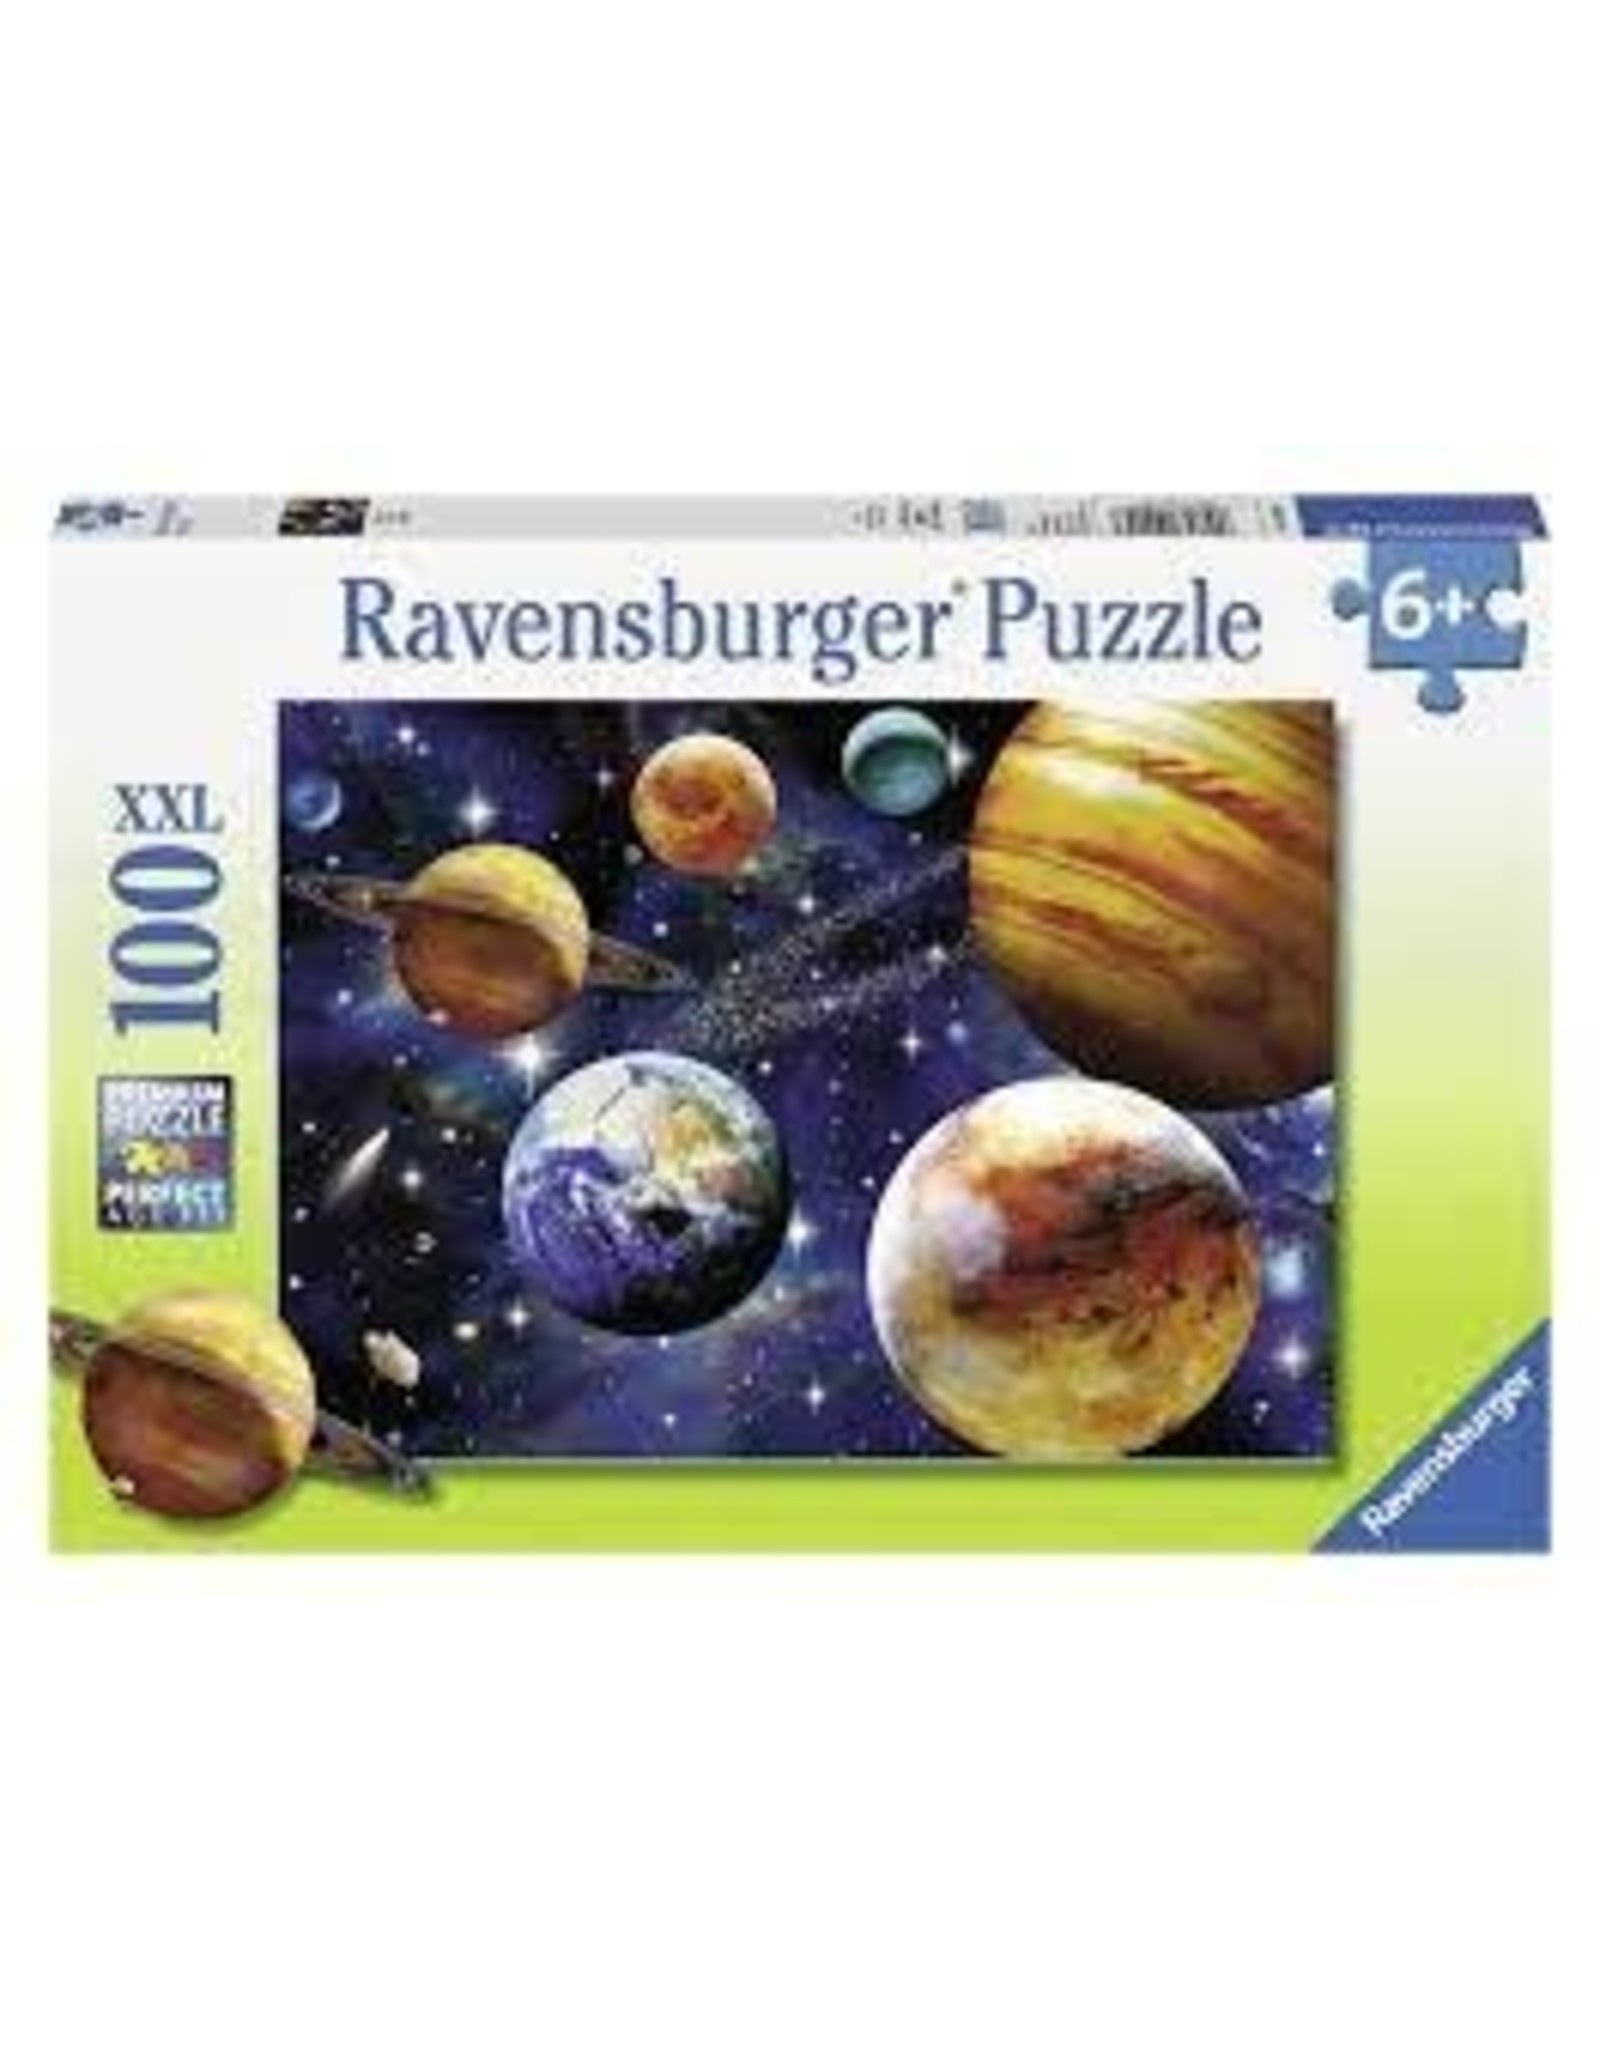 Ravensburger Ravensburger Puzzle: Space 100pc